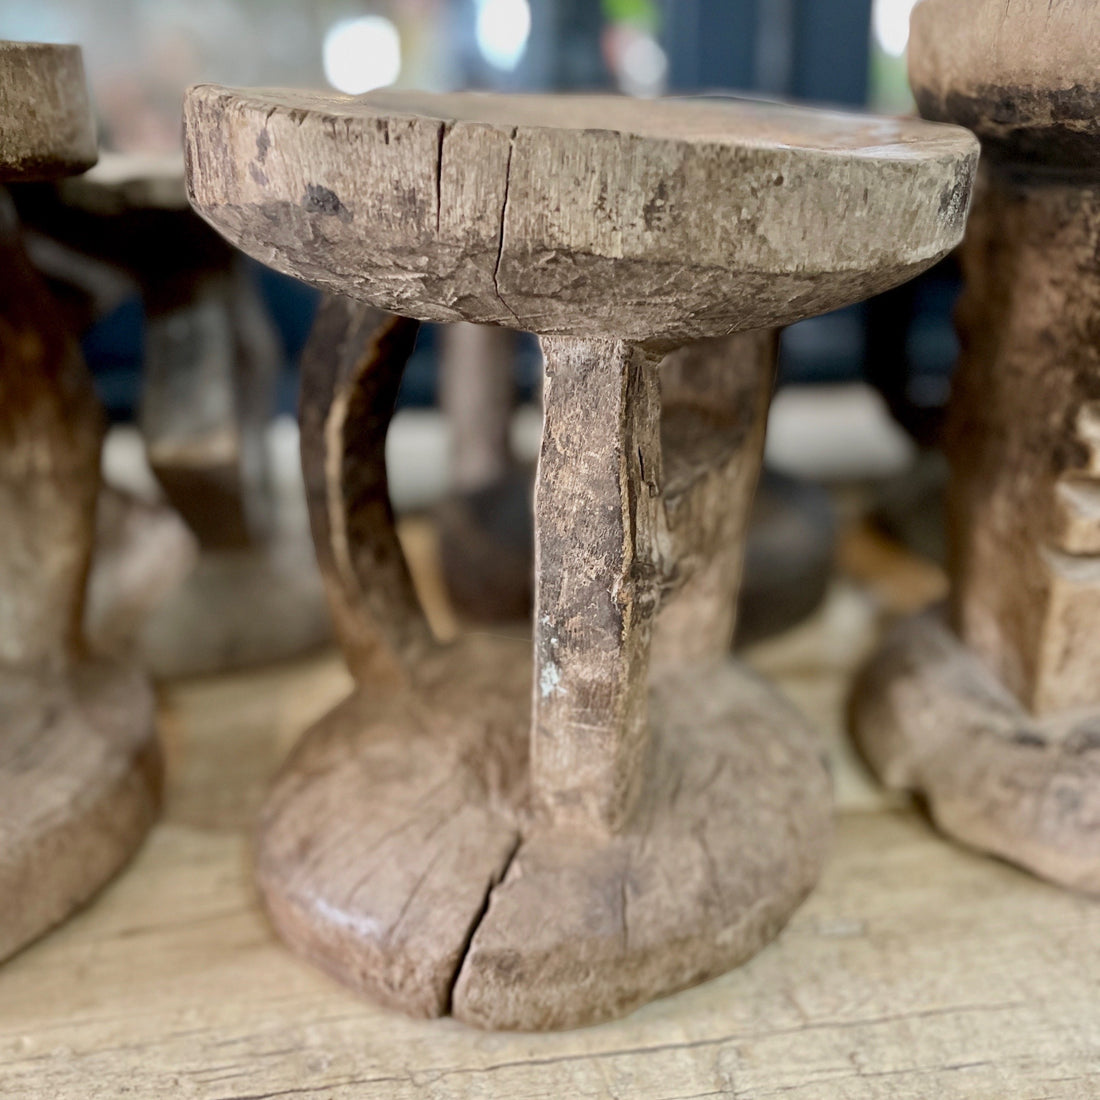 NEW - Vintage Tonga Stools (Decorative)